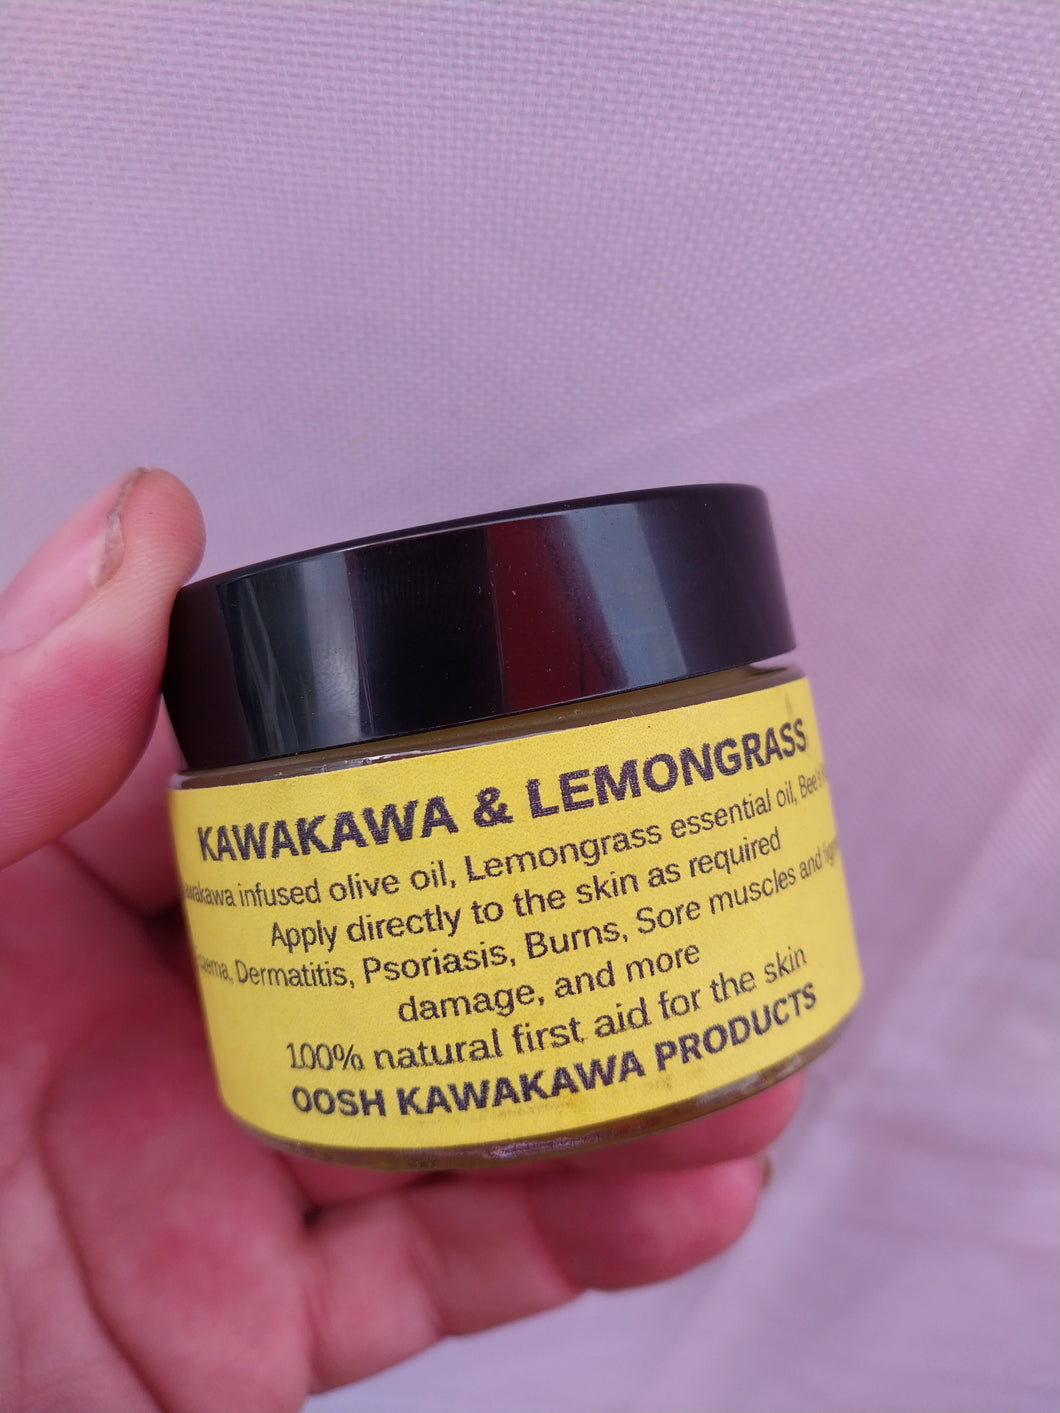 Lemongrass and Kawakawa Balm